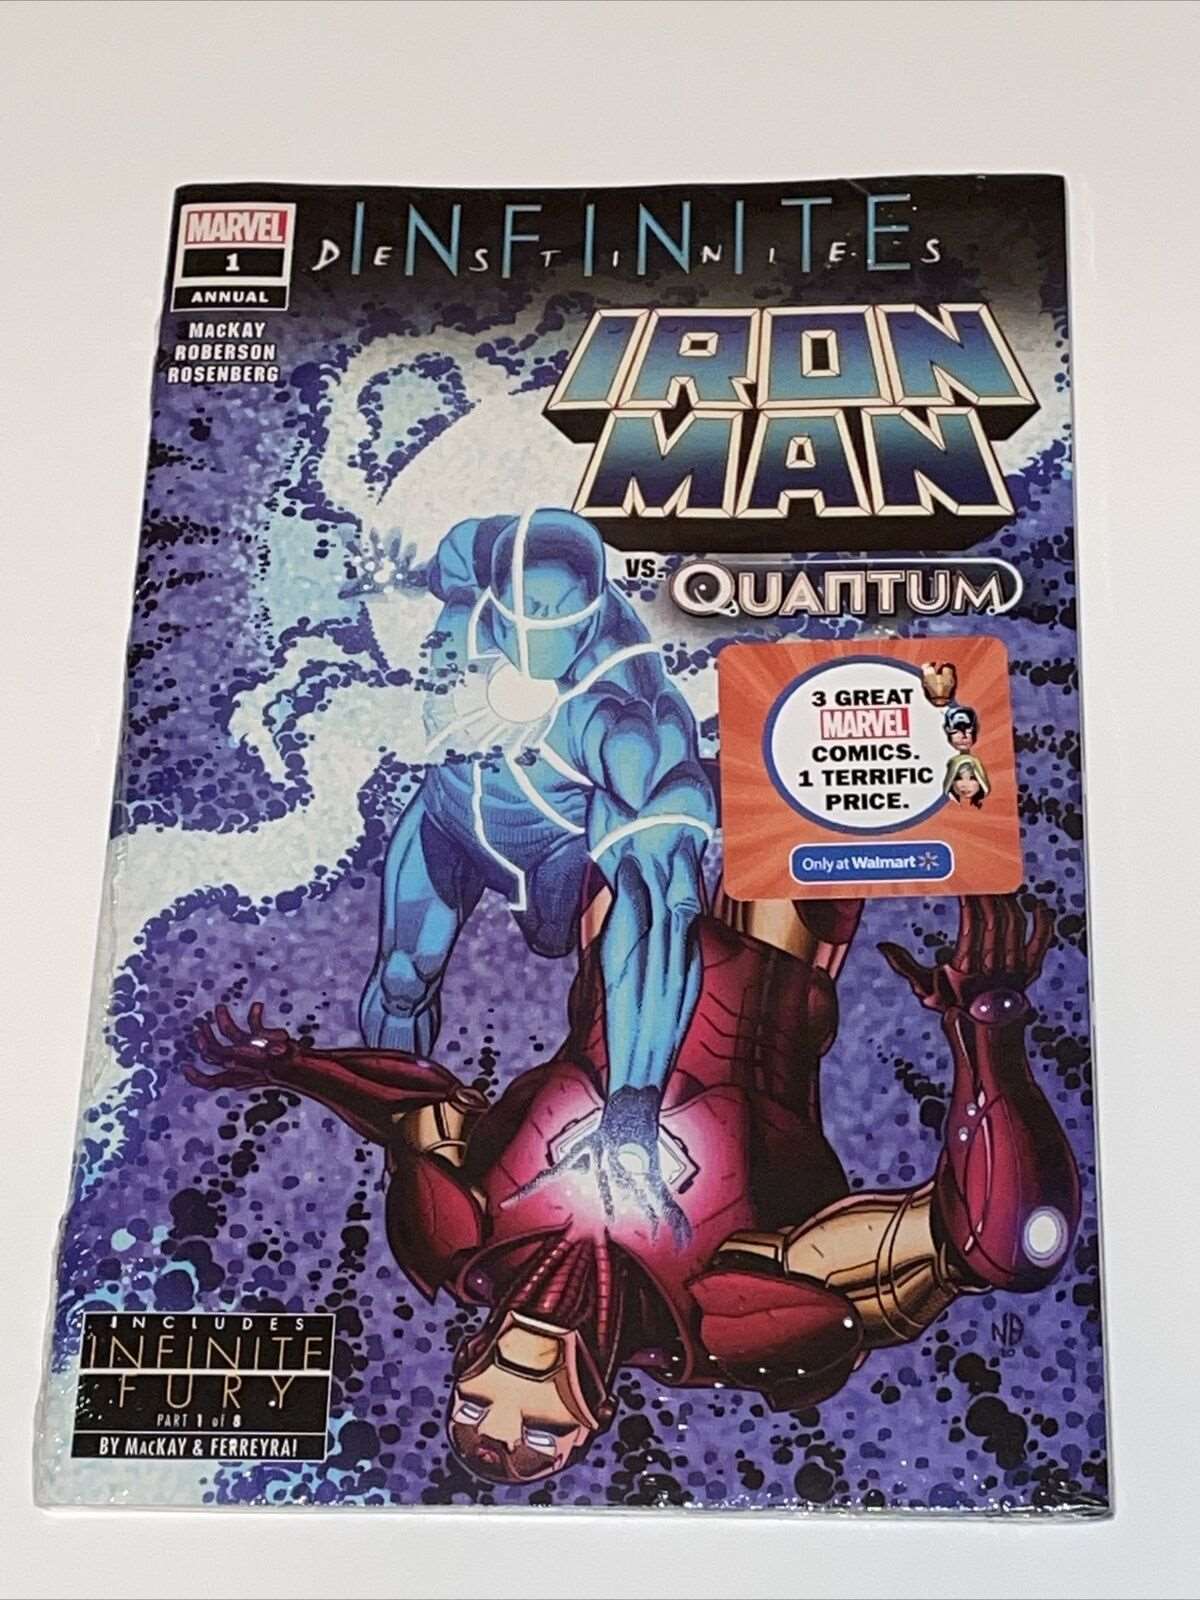 marvel comics Iron Man Annual infinite destines issue 1 walmart comic 3 pack